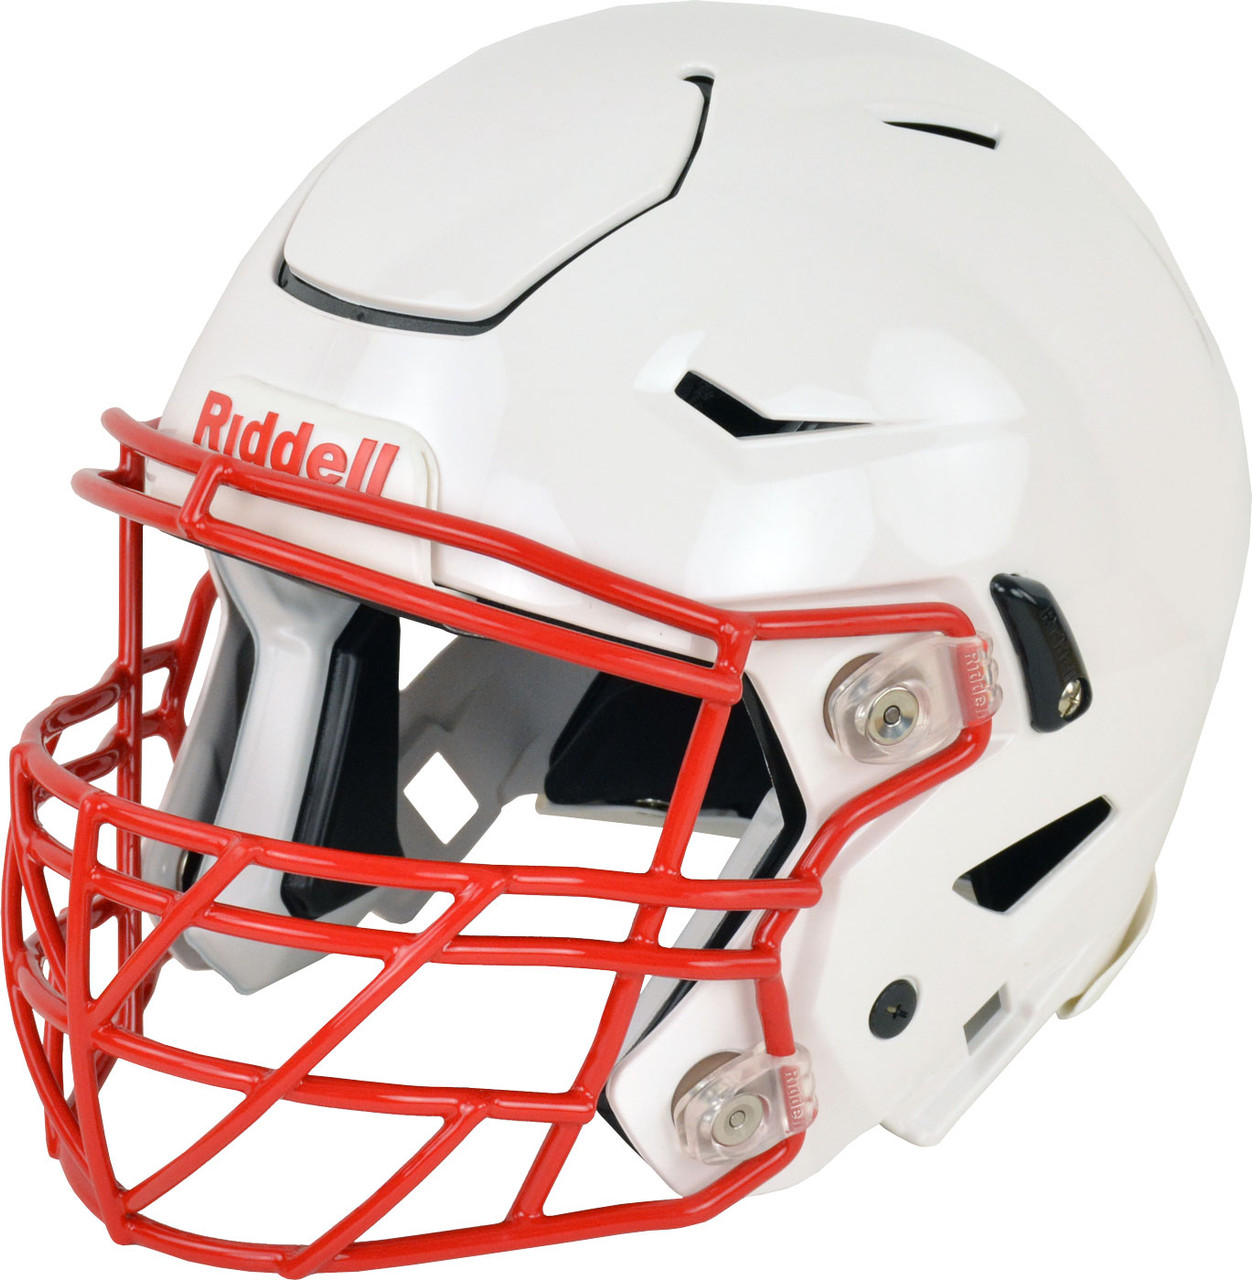 Riddell SpeedFlex SF-2EG-TX Facemask